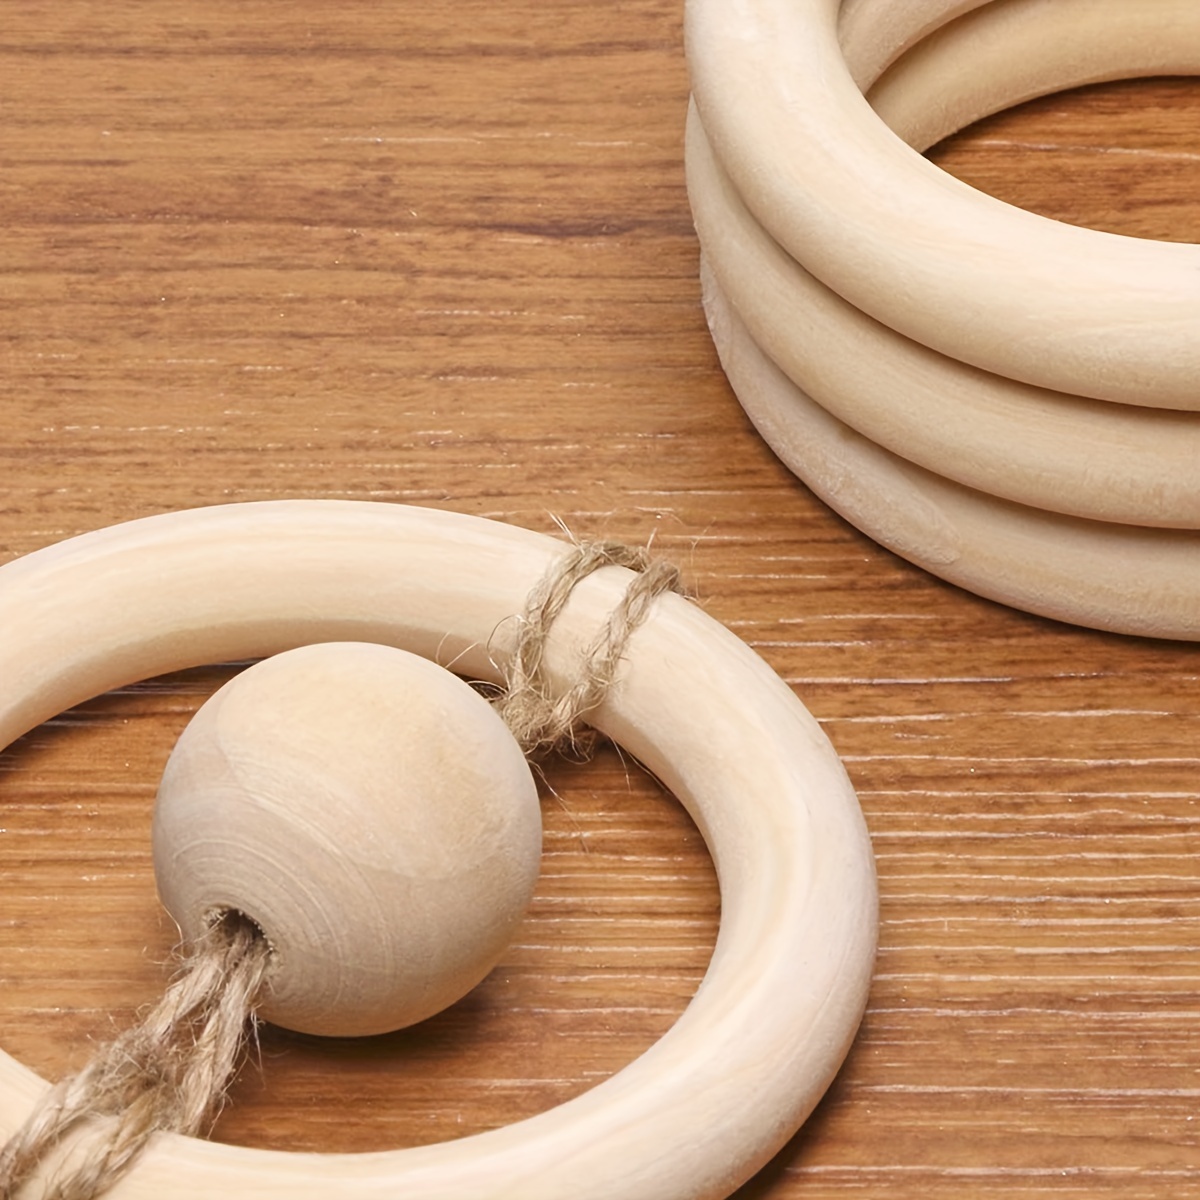 10pcs Diy Wooden Circular Hoops Home Decorative Craft Supplies